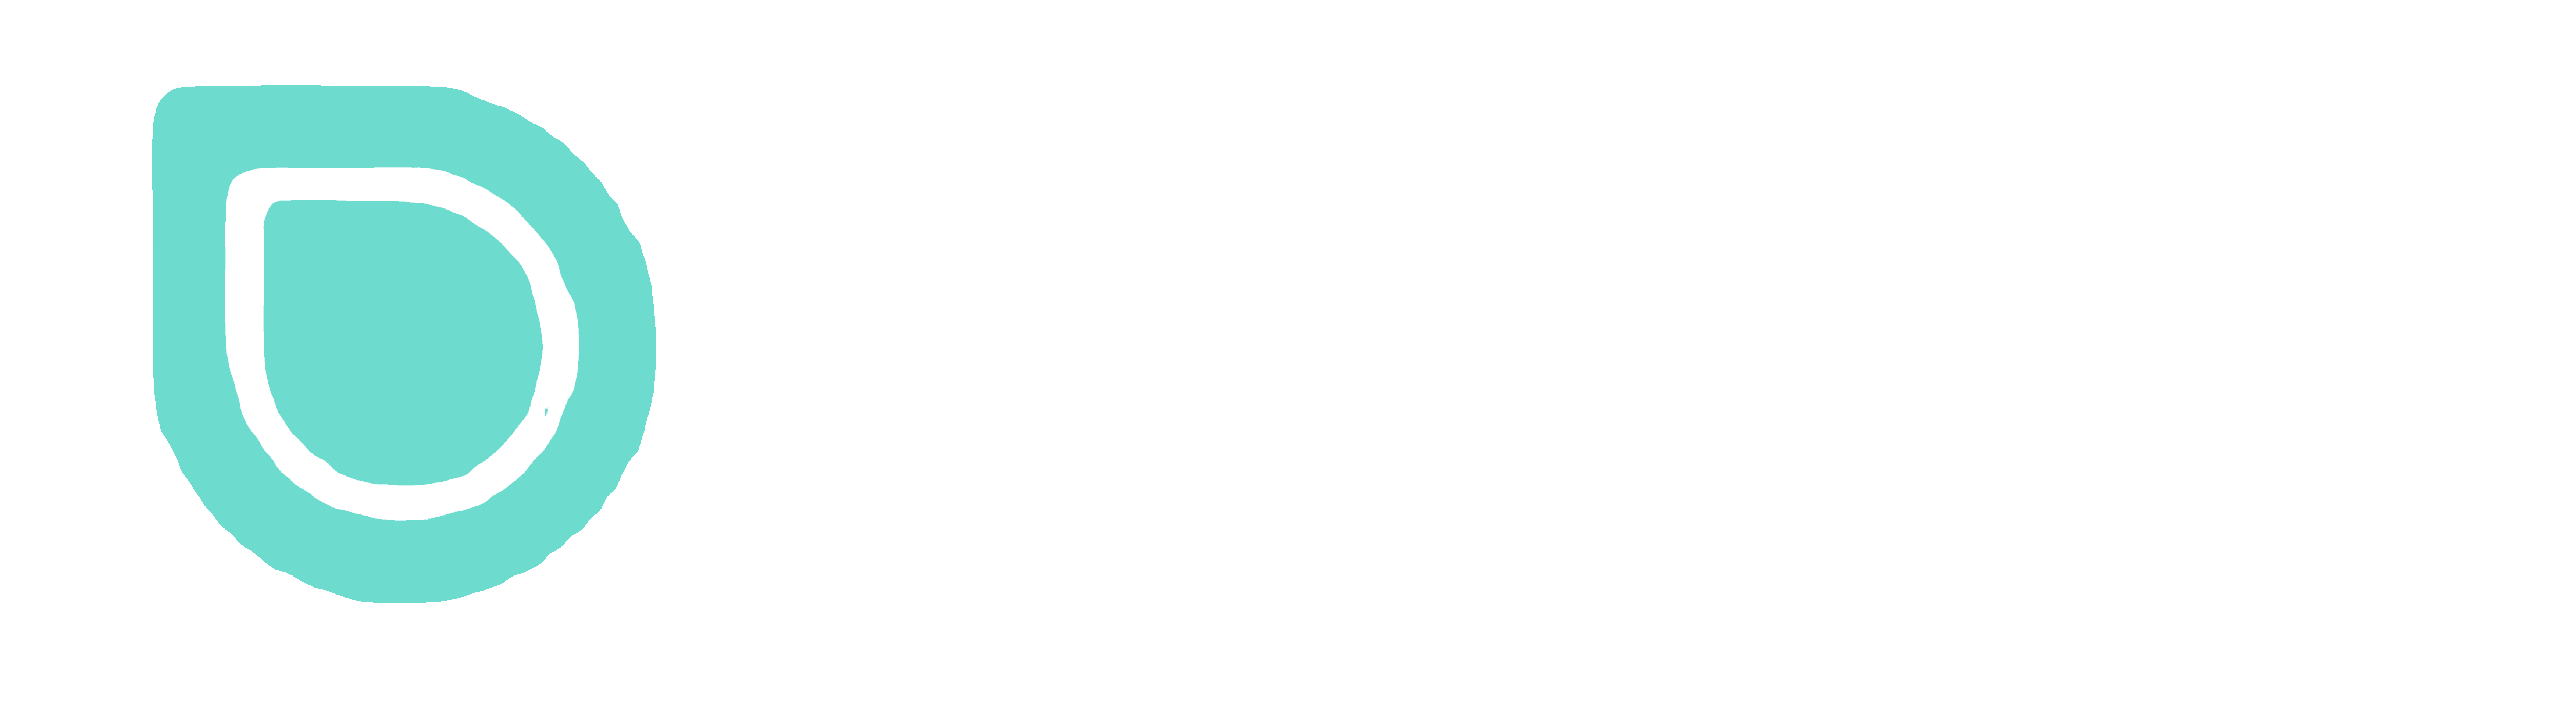 Techhq Global